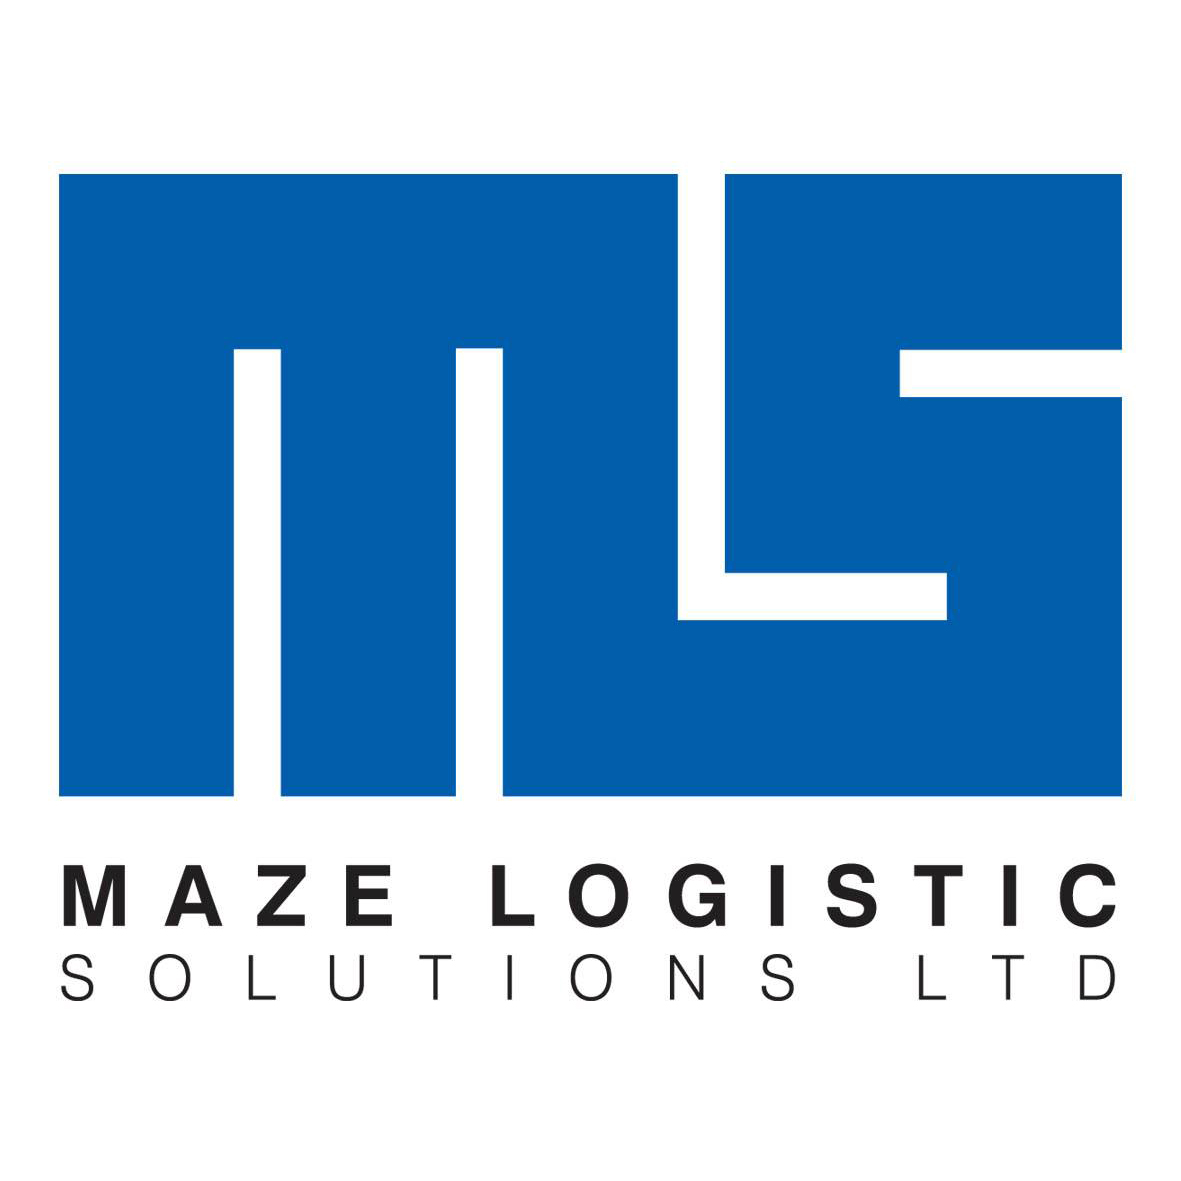 Maze Logistic Solutions Ltd